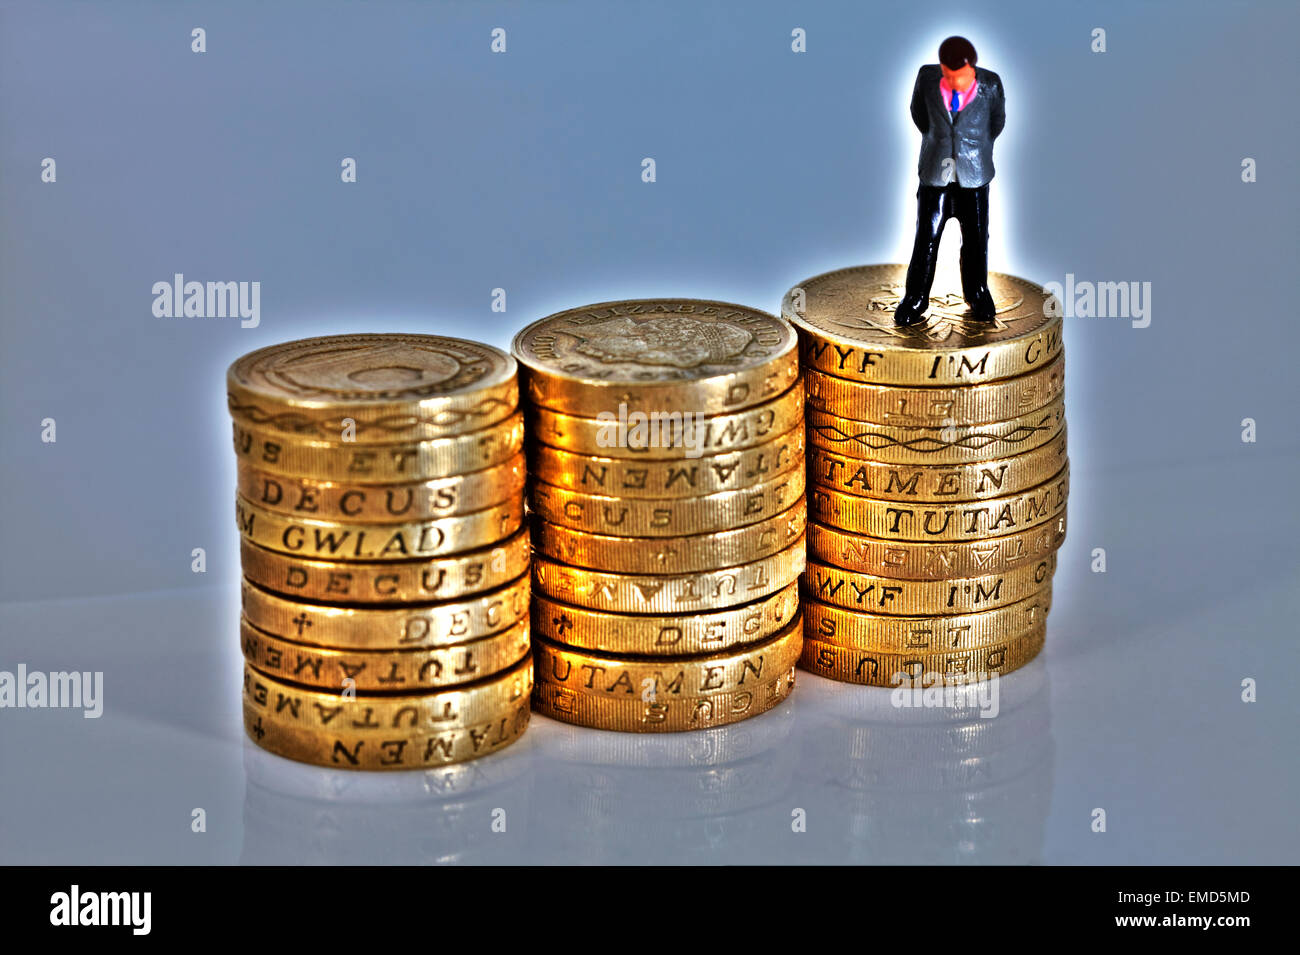 money worries problems jobless debt bankrupt bankruptcy loan loans skint cash stacks of pound coins UK England Stock Photo